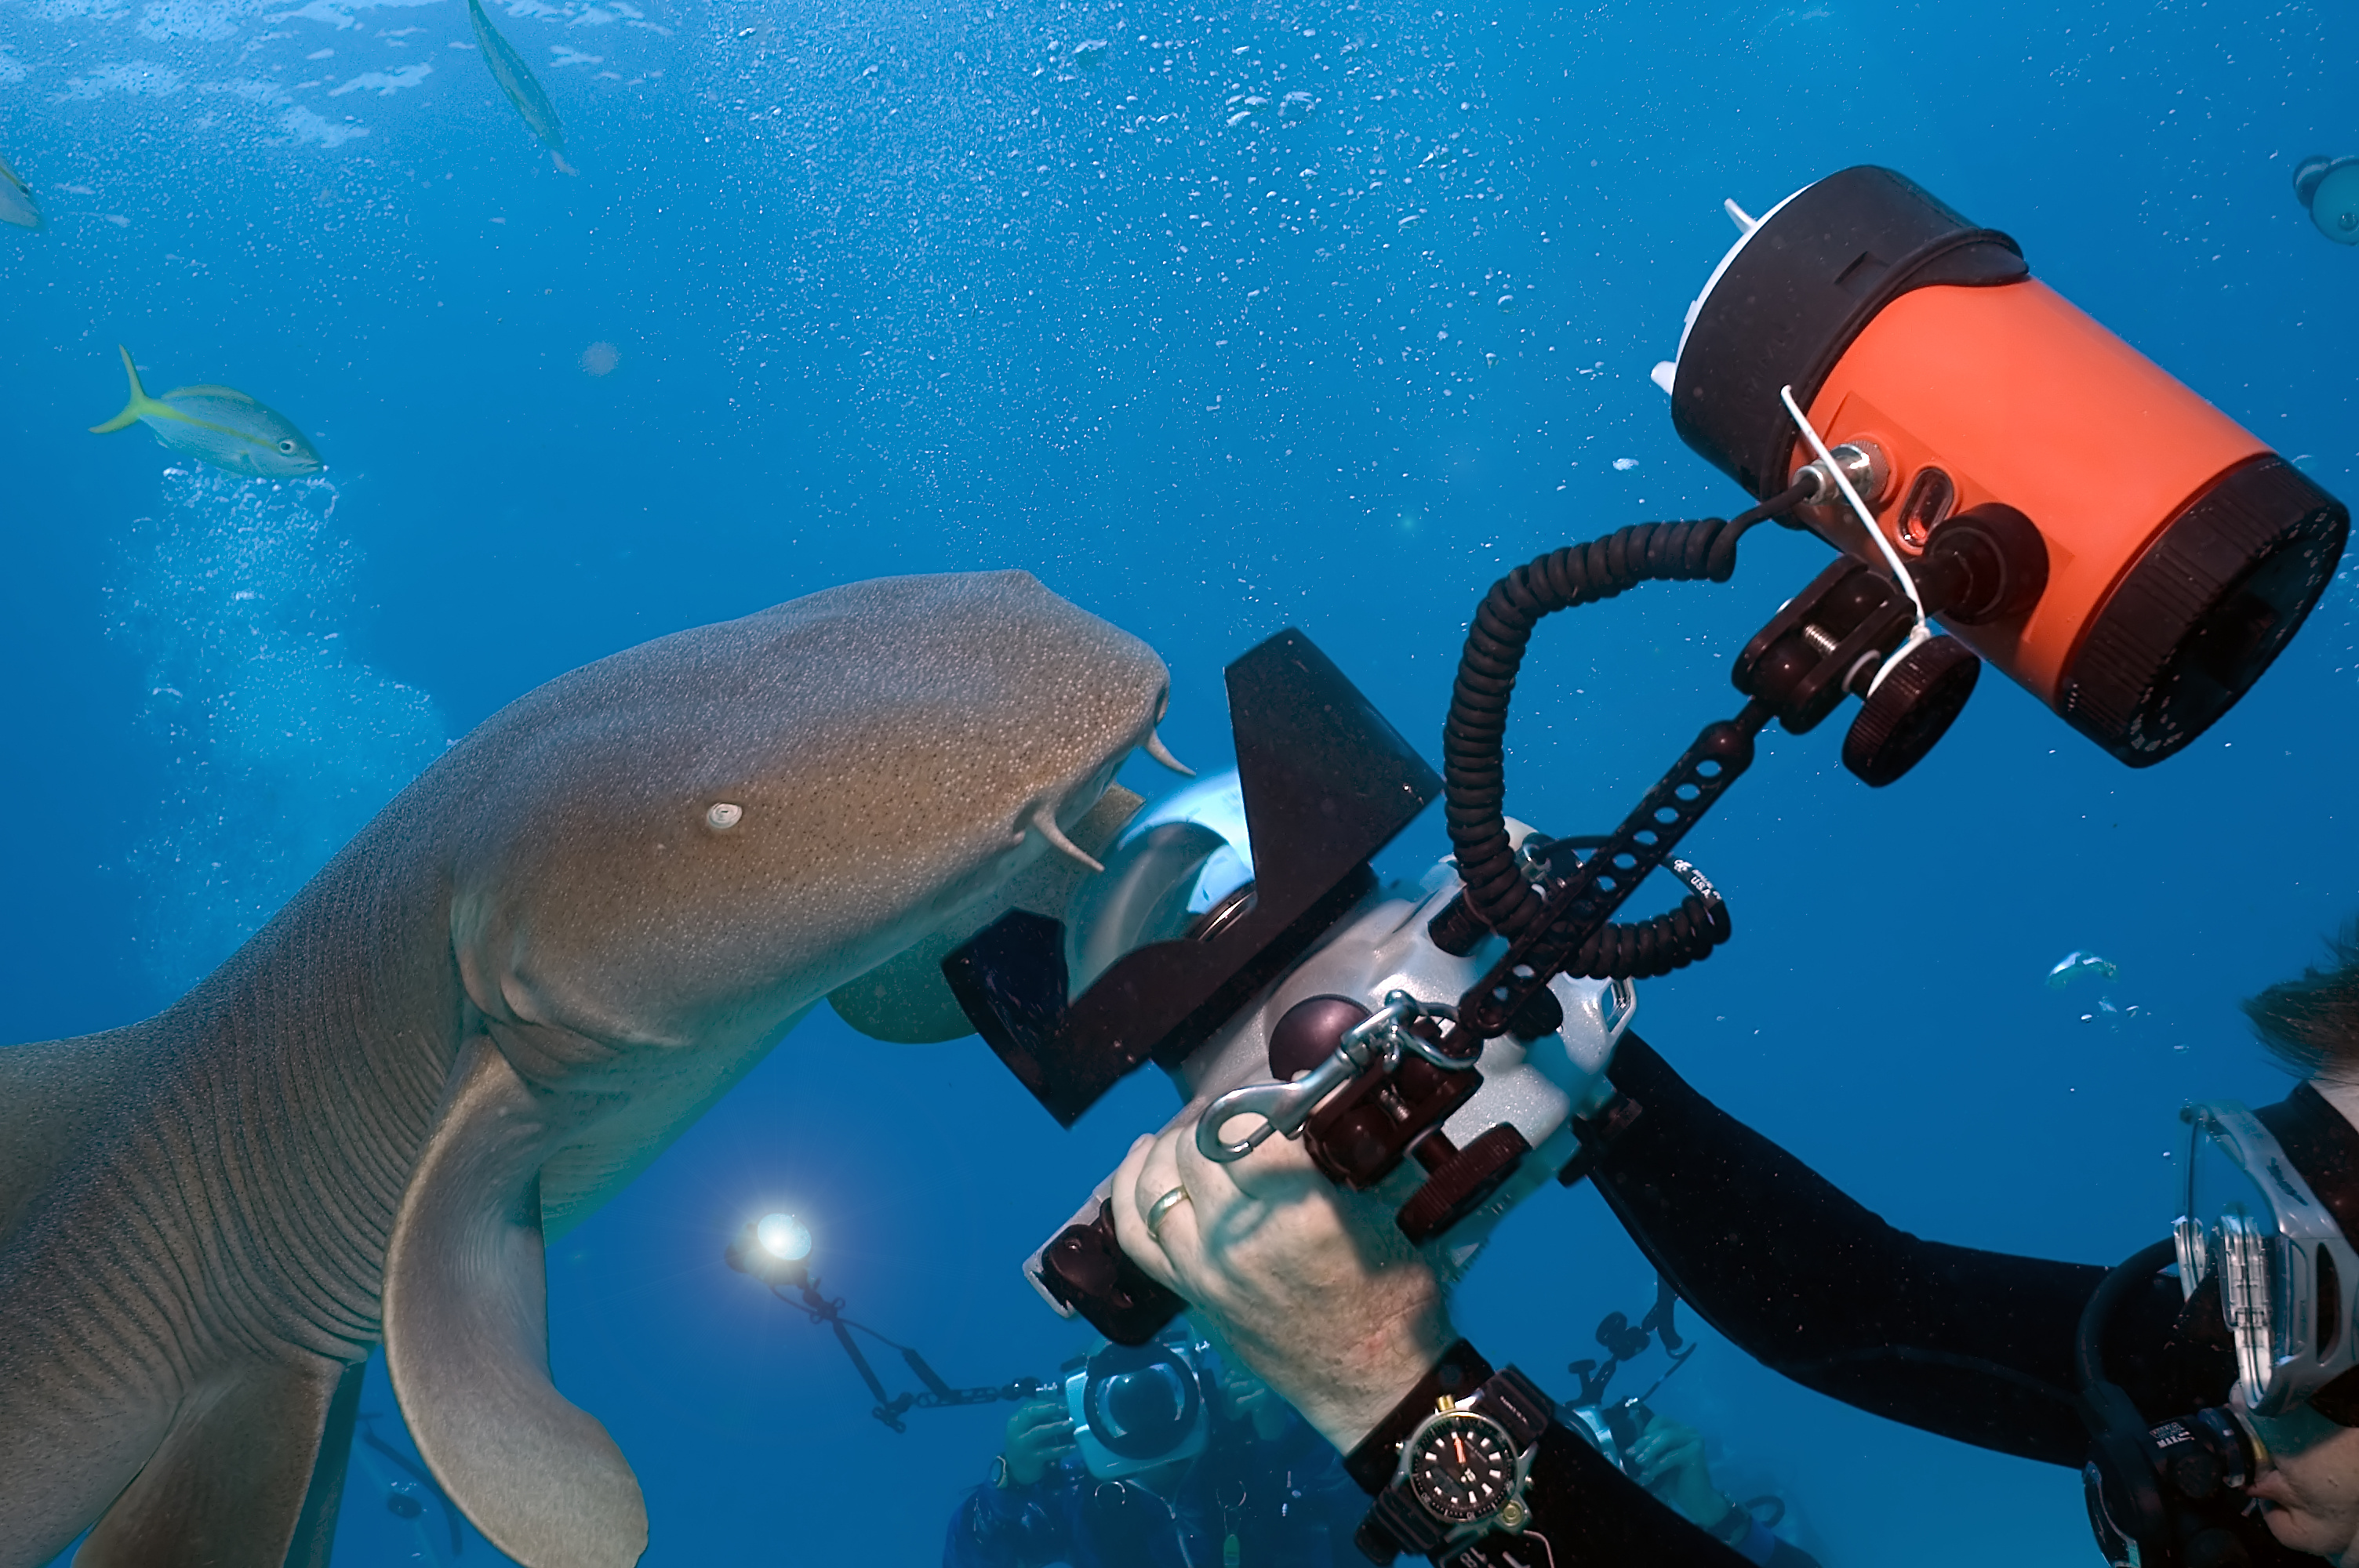 Underwater photographer snaps photos as a nurse shark investigates his gear